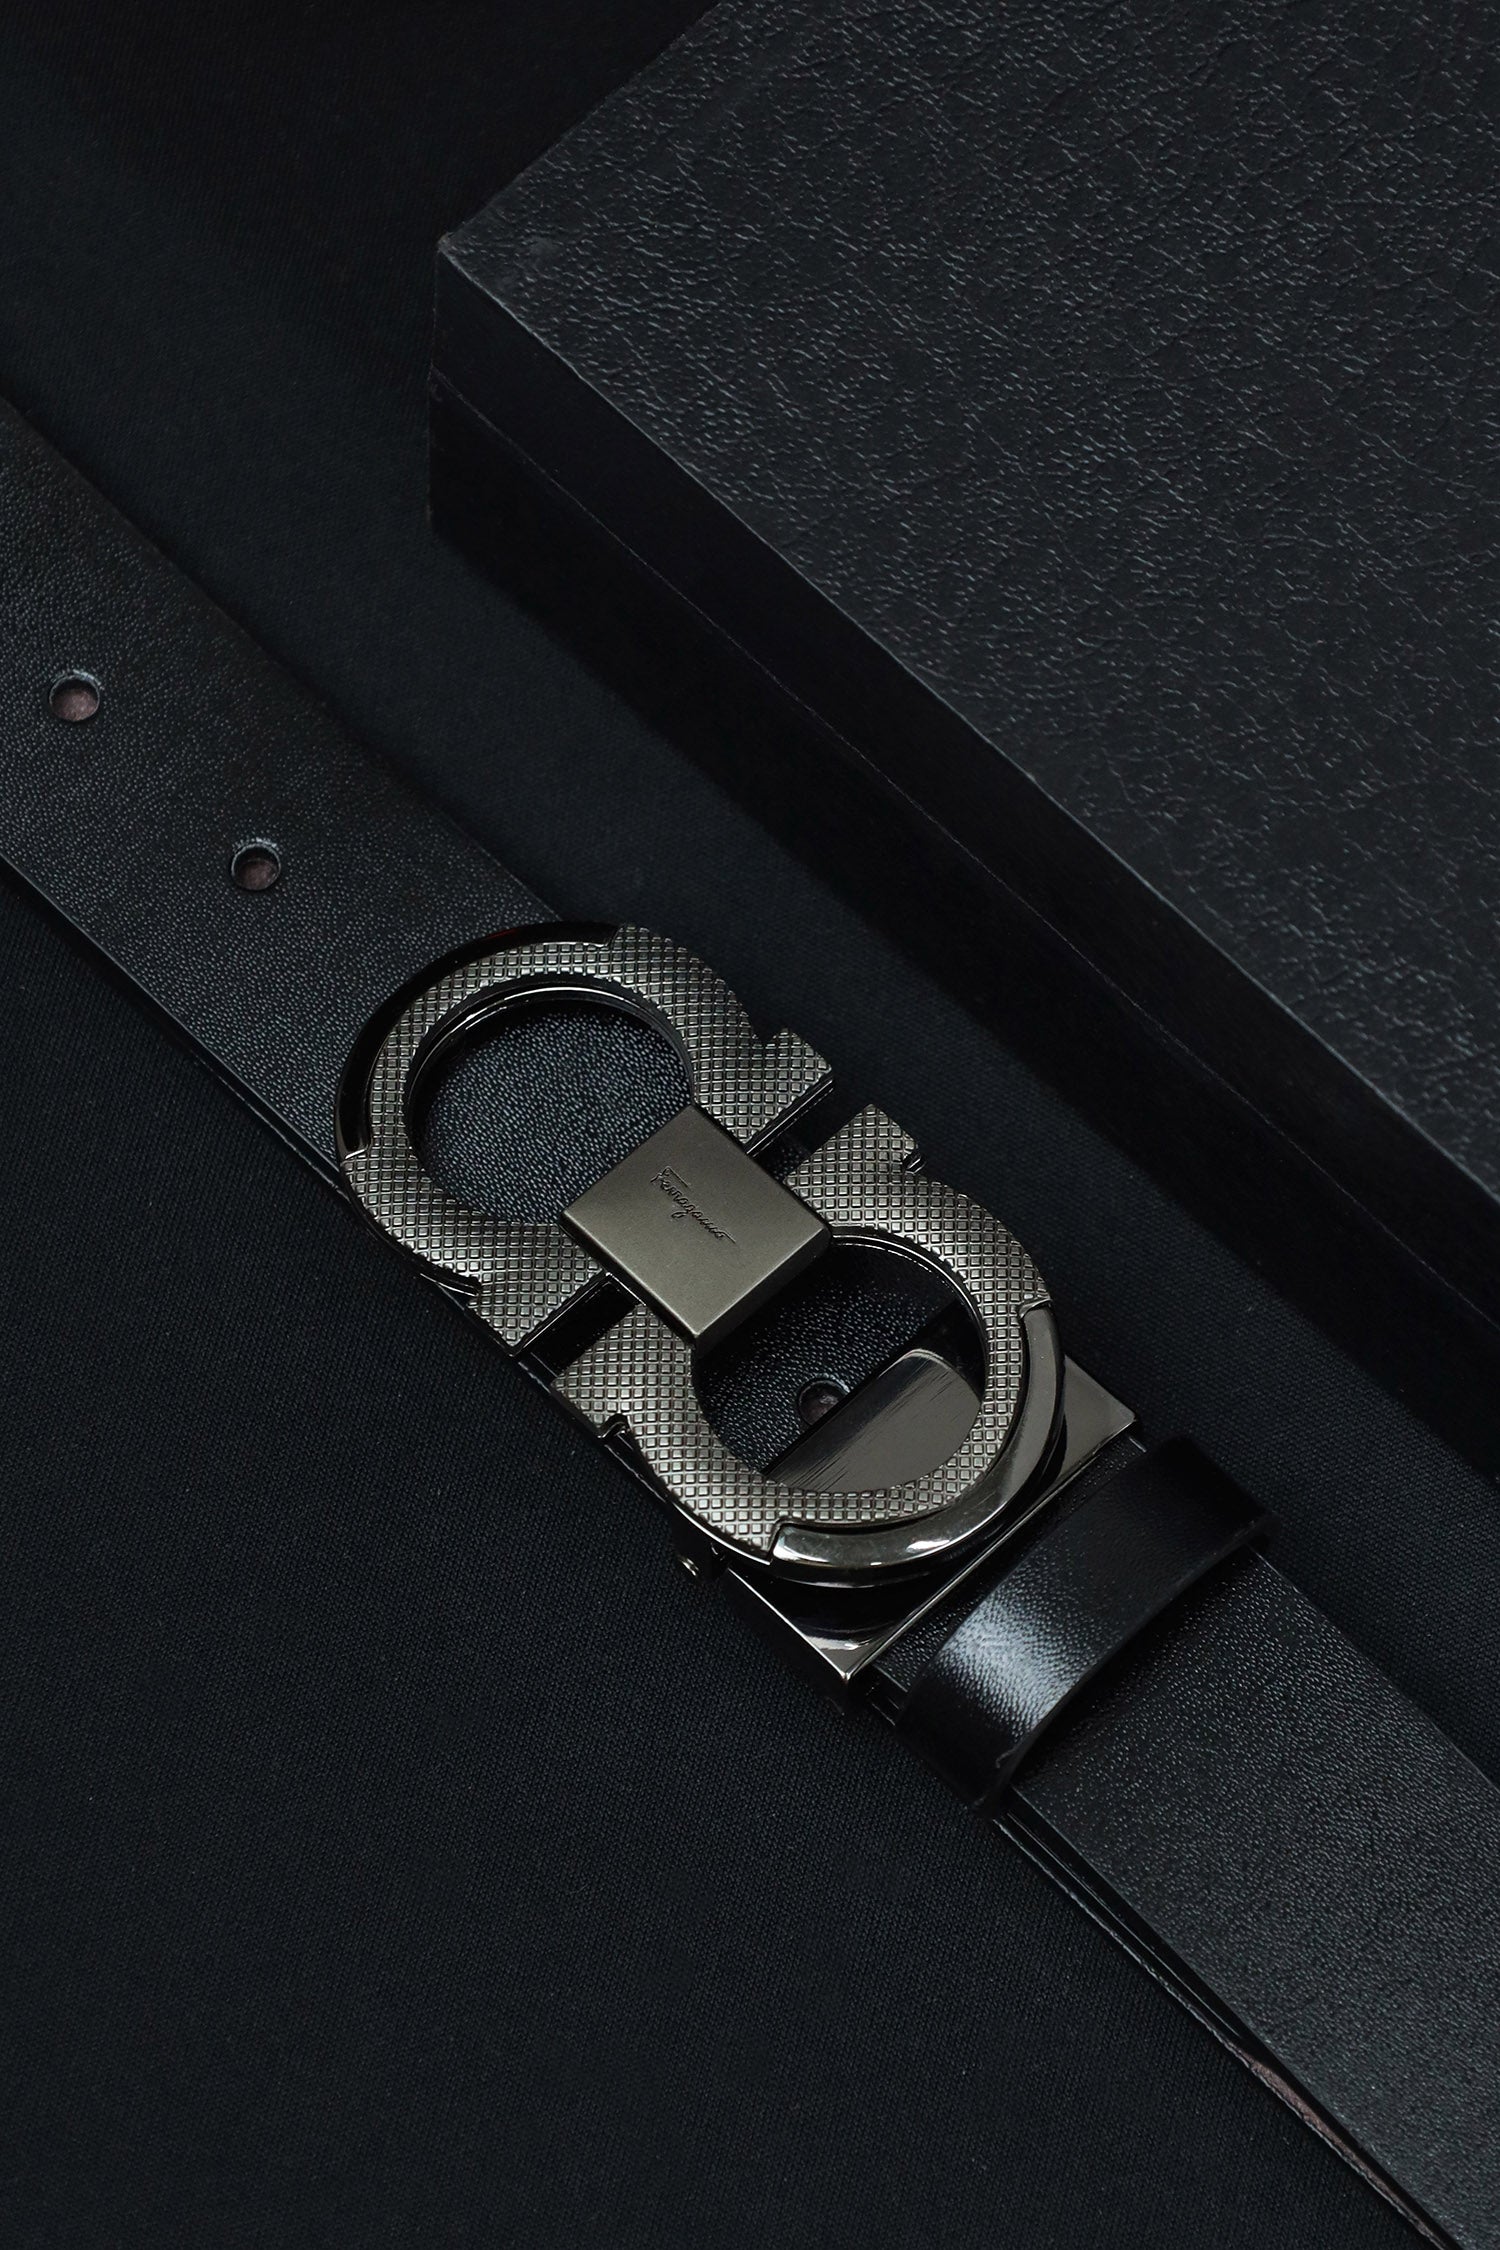 Feragamo Metal Alloy Automatic Buckle Branded Belt